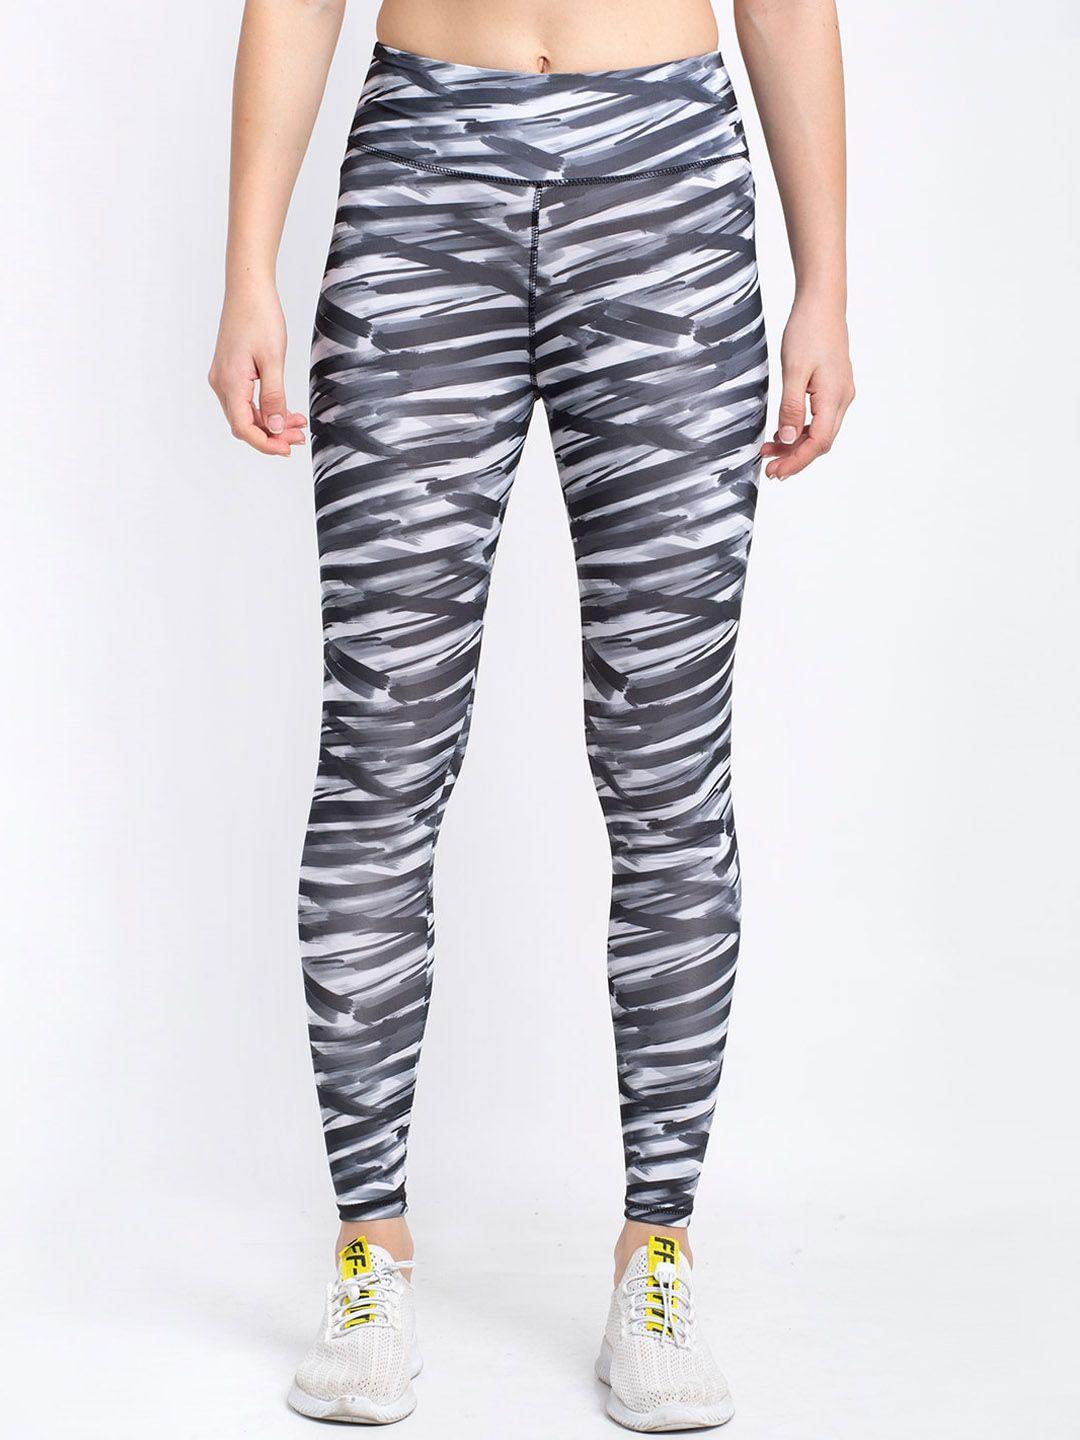 boston club women charcoal grey & white printed skinny-fit sports tights